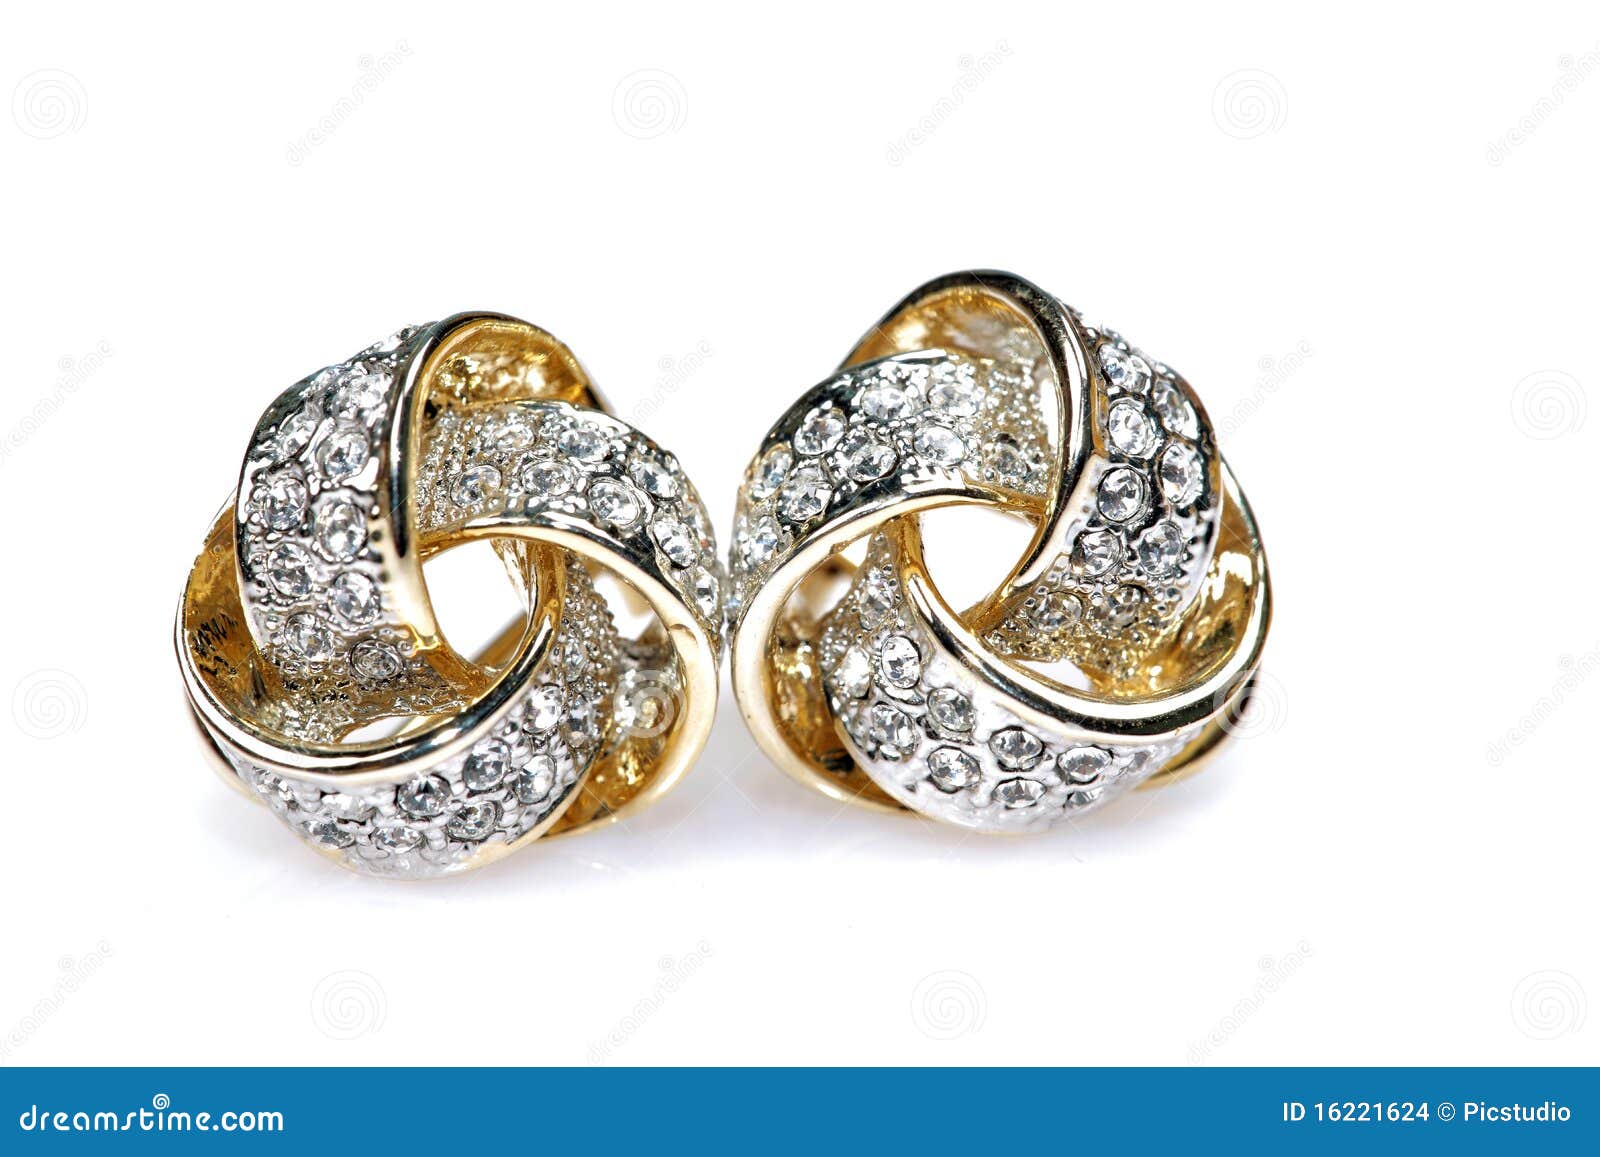 diamond studded earrings jewellery